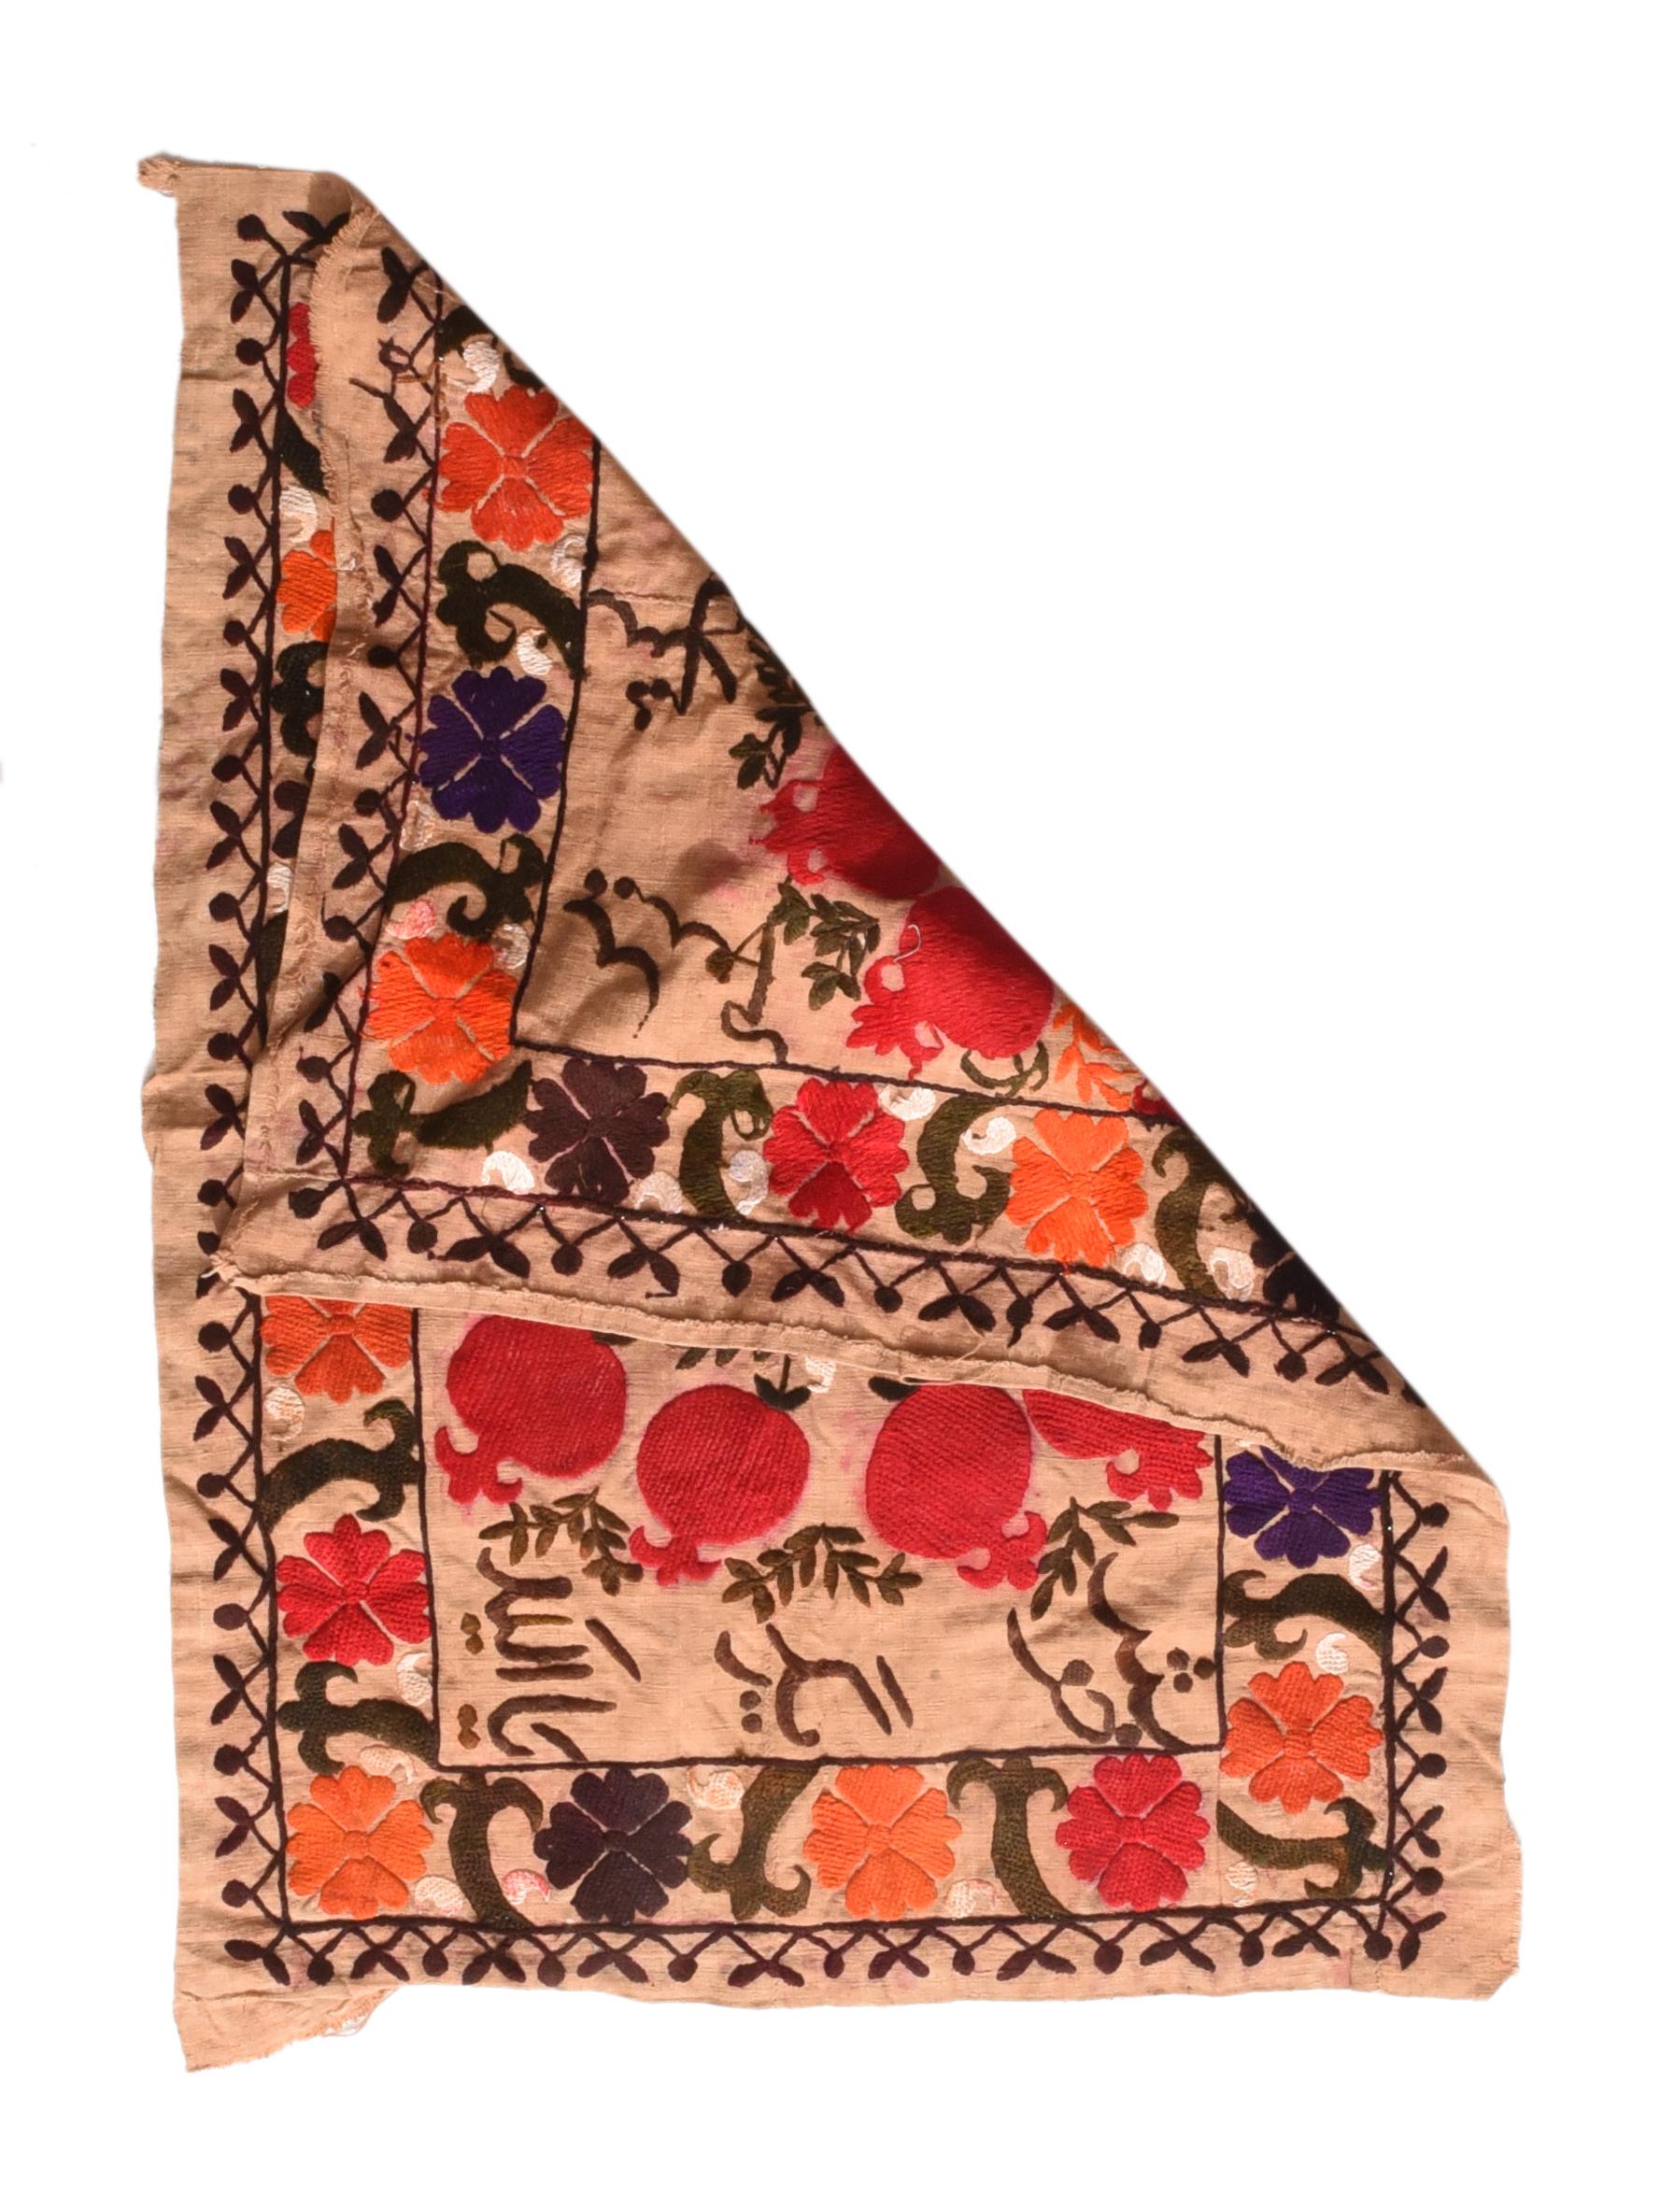 Vintage Uzbak Suzani Embroidery Rug 2' x 2'7''.